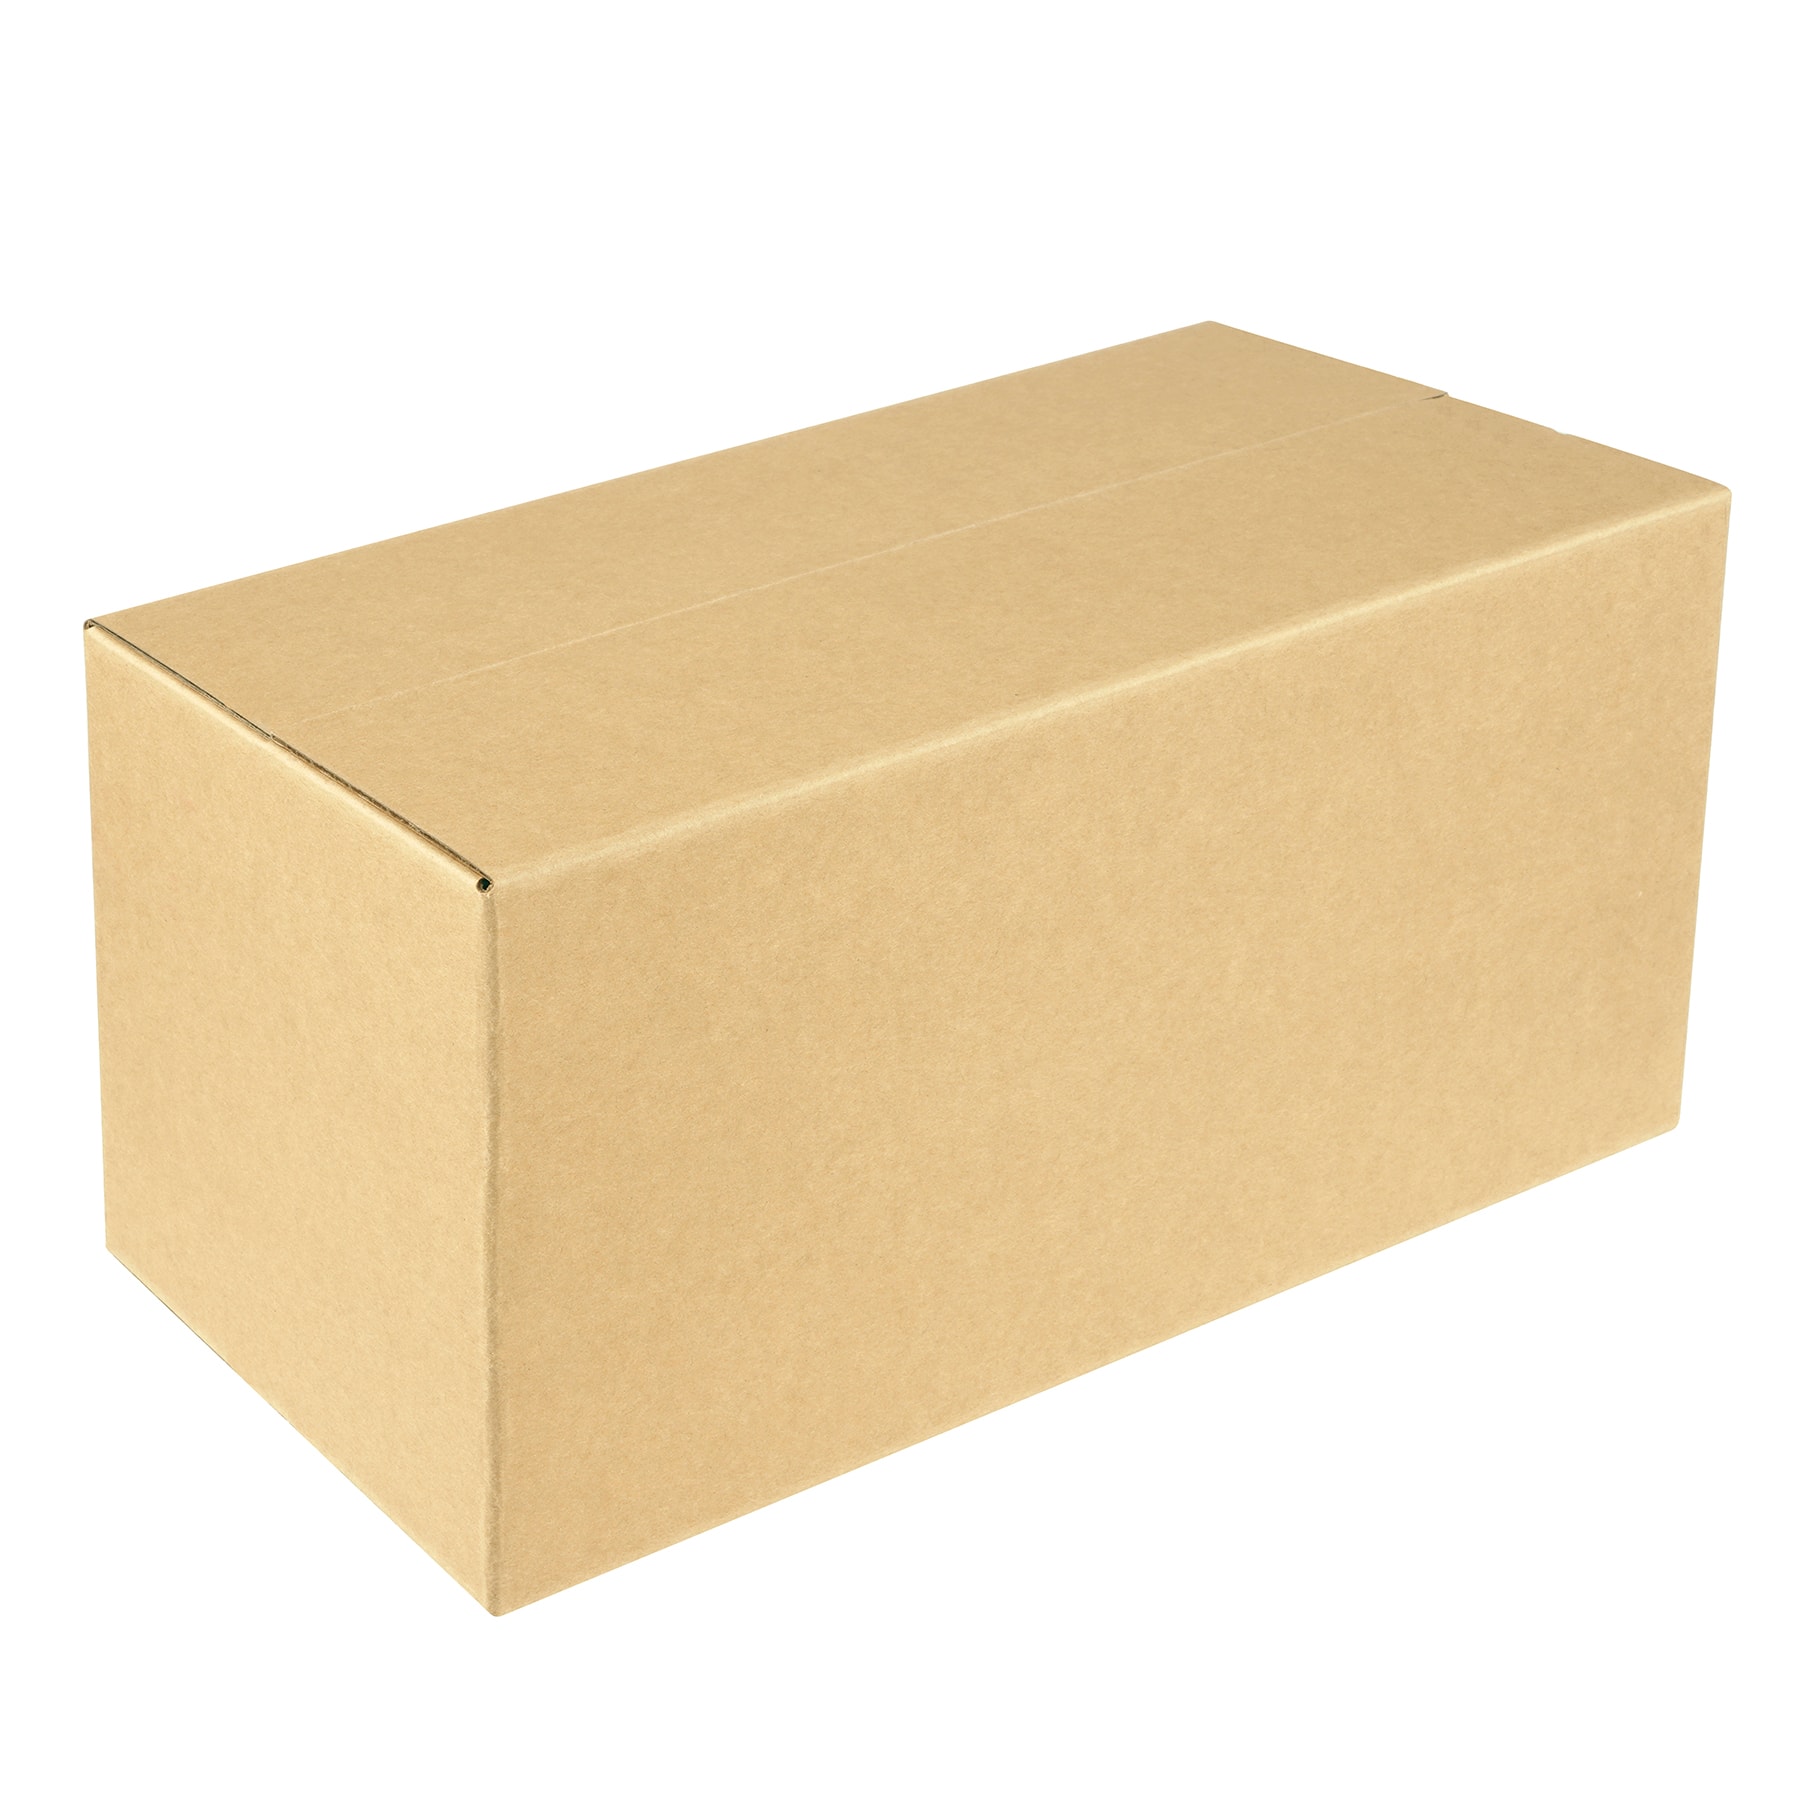 12 Pack: Medium Shipping Box by Celebrate It&#x2122;